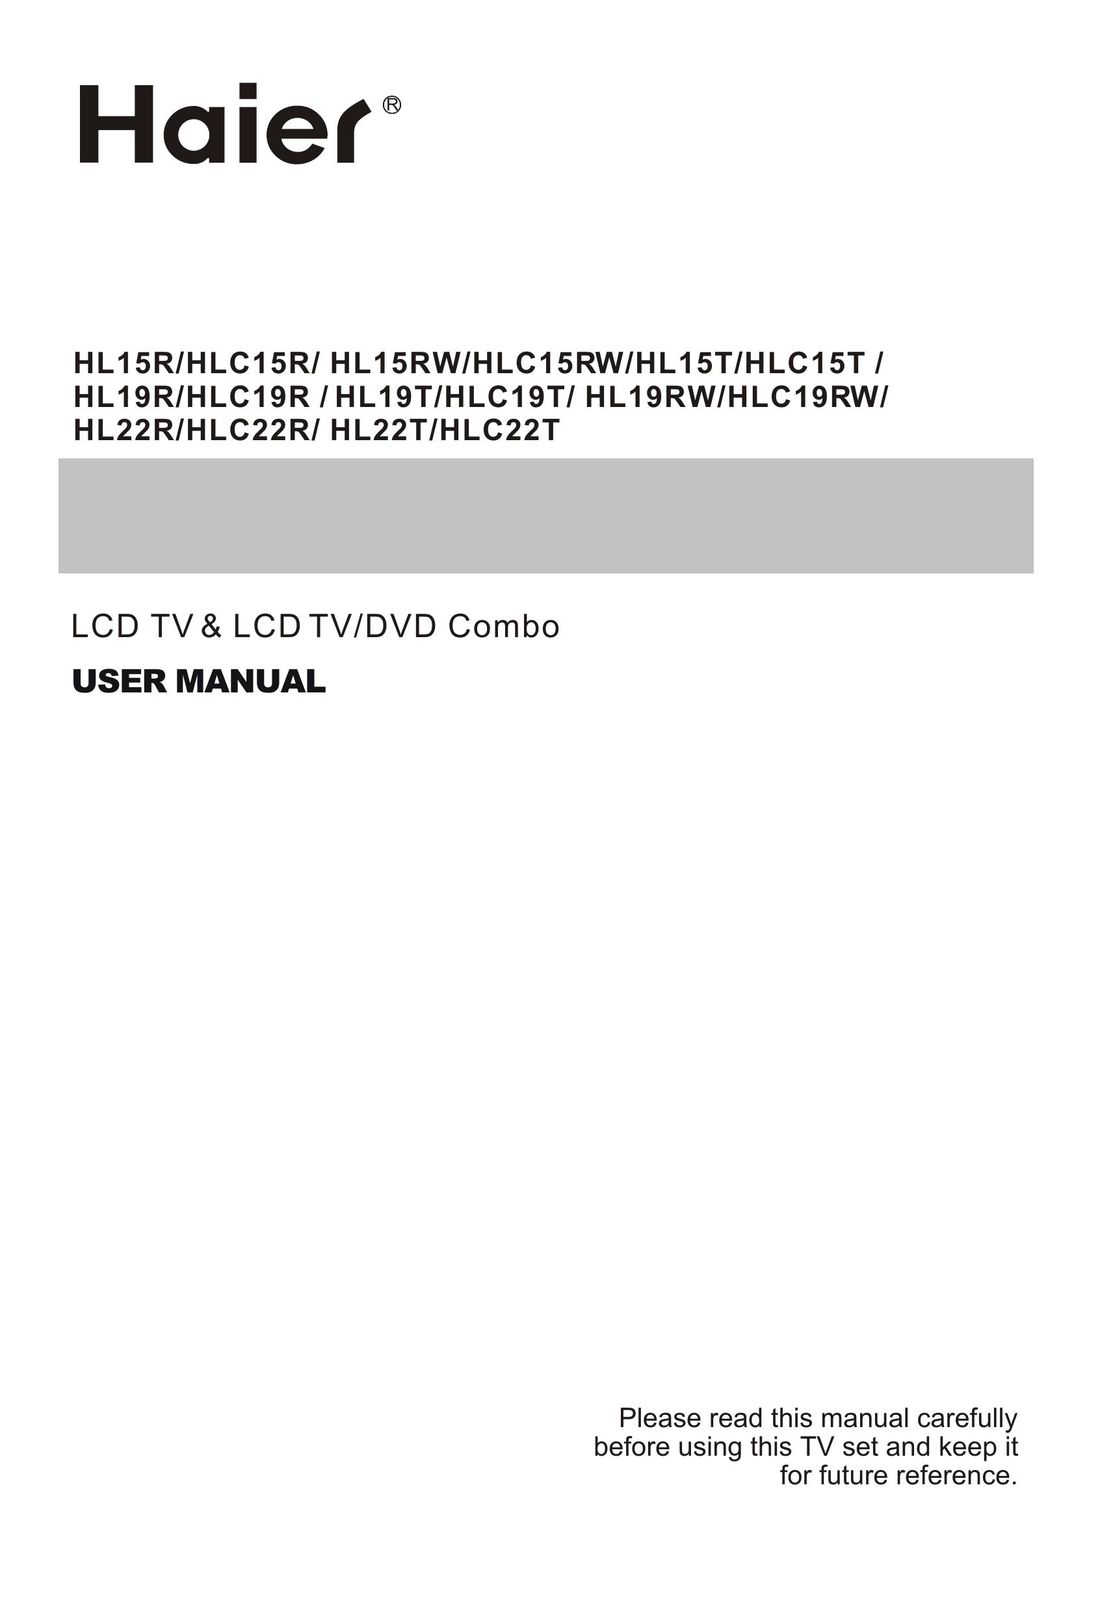 Haier HLC15RW TV DVD Combo User Manual